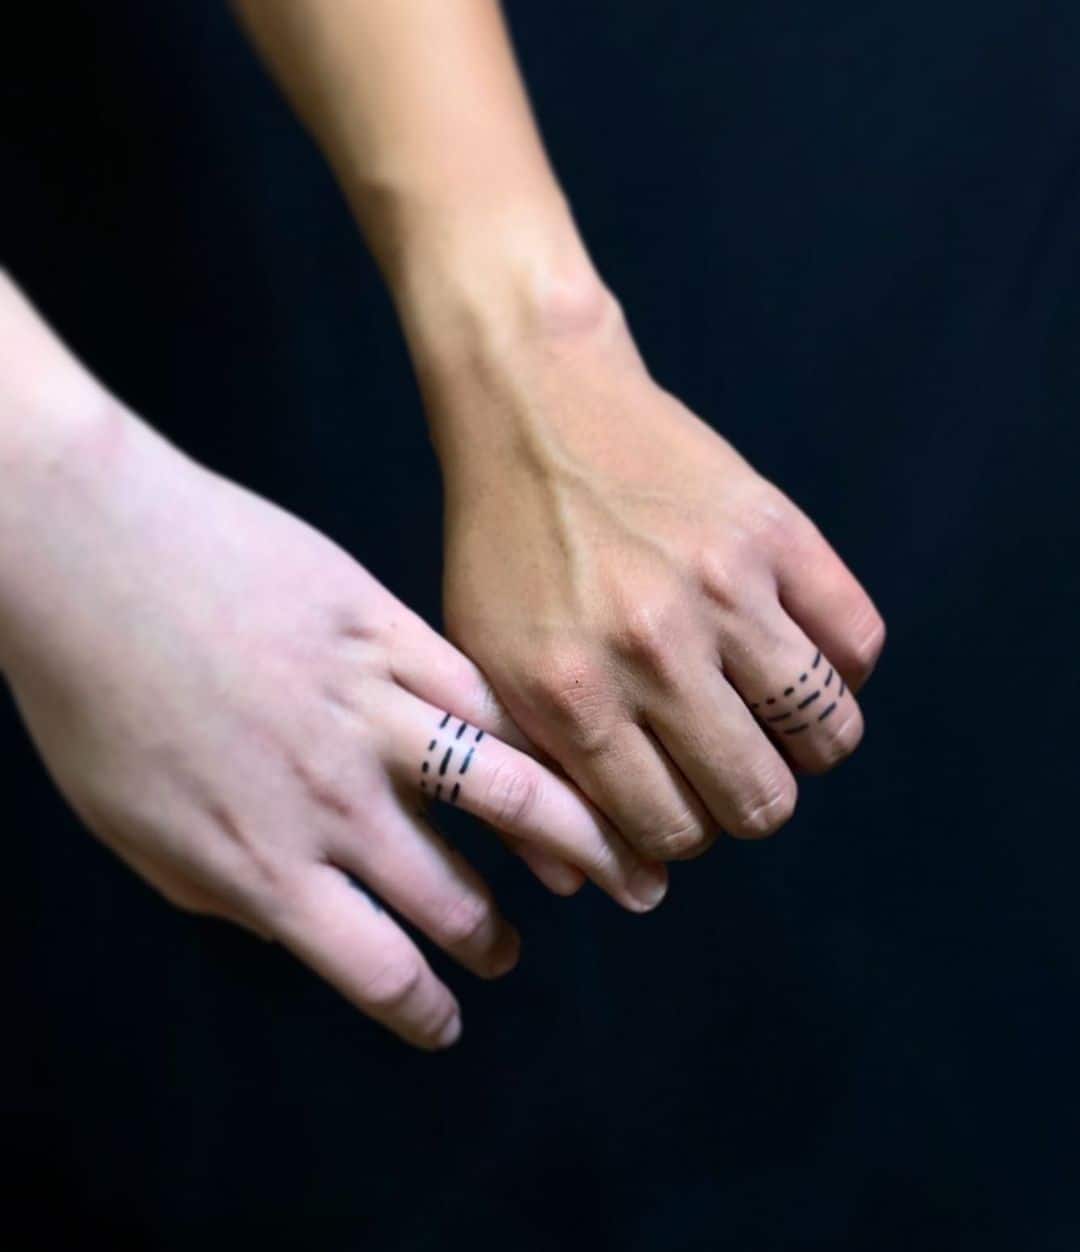 Line wedding ring tattoo on fingers